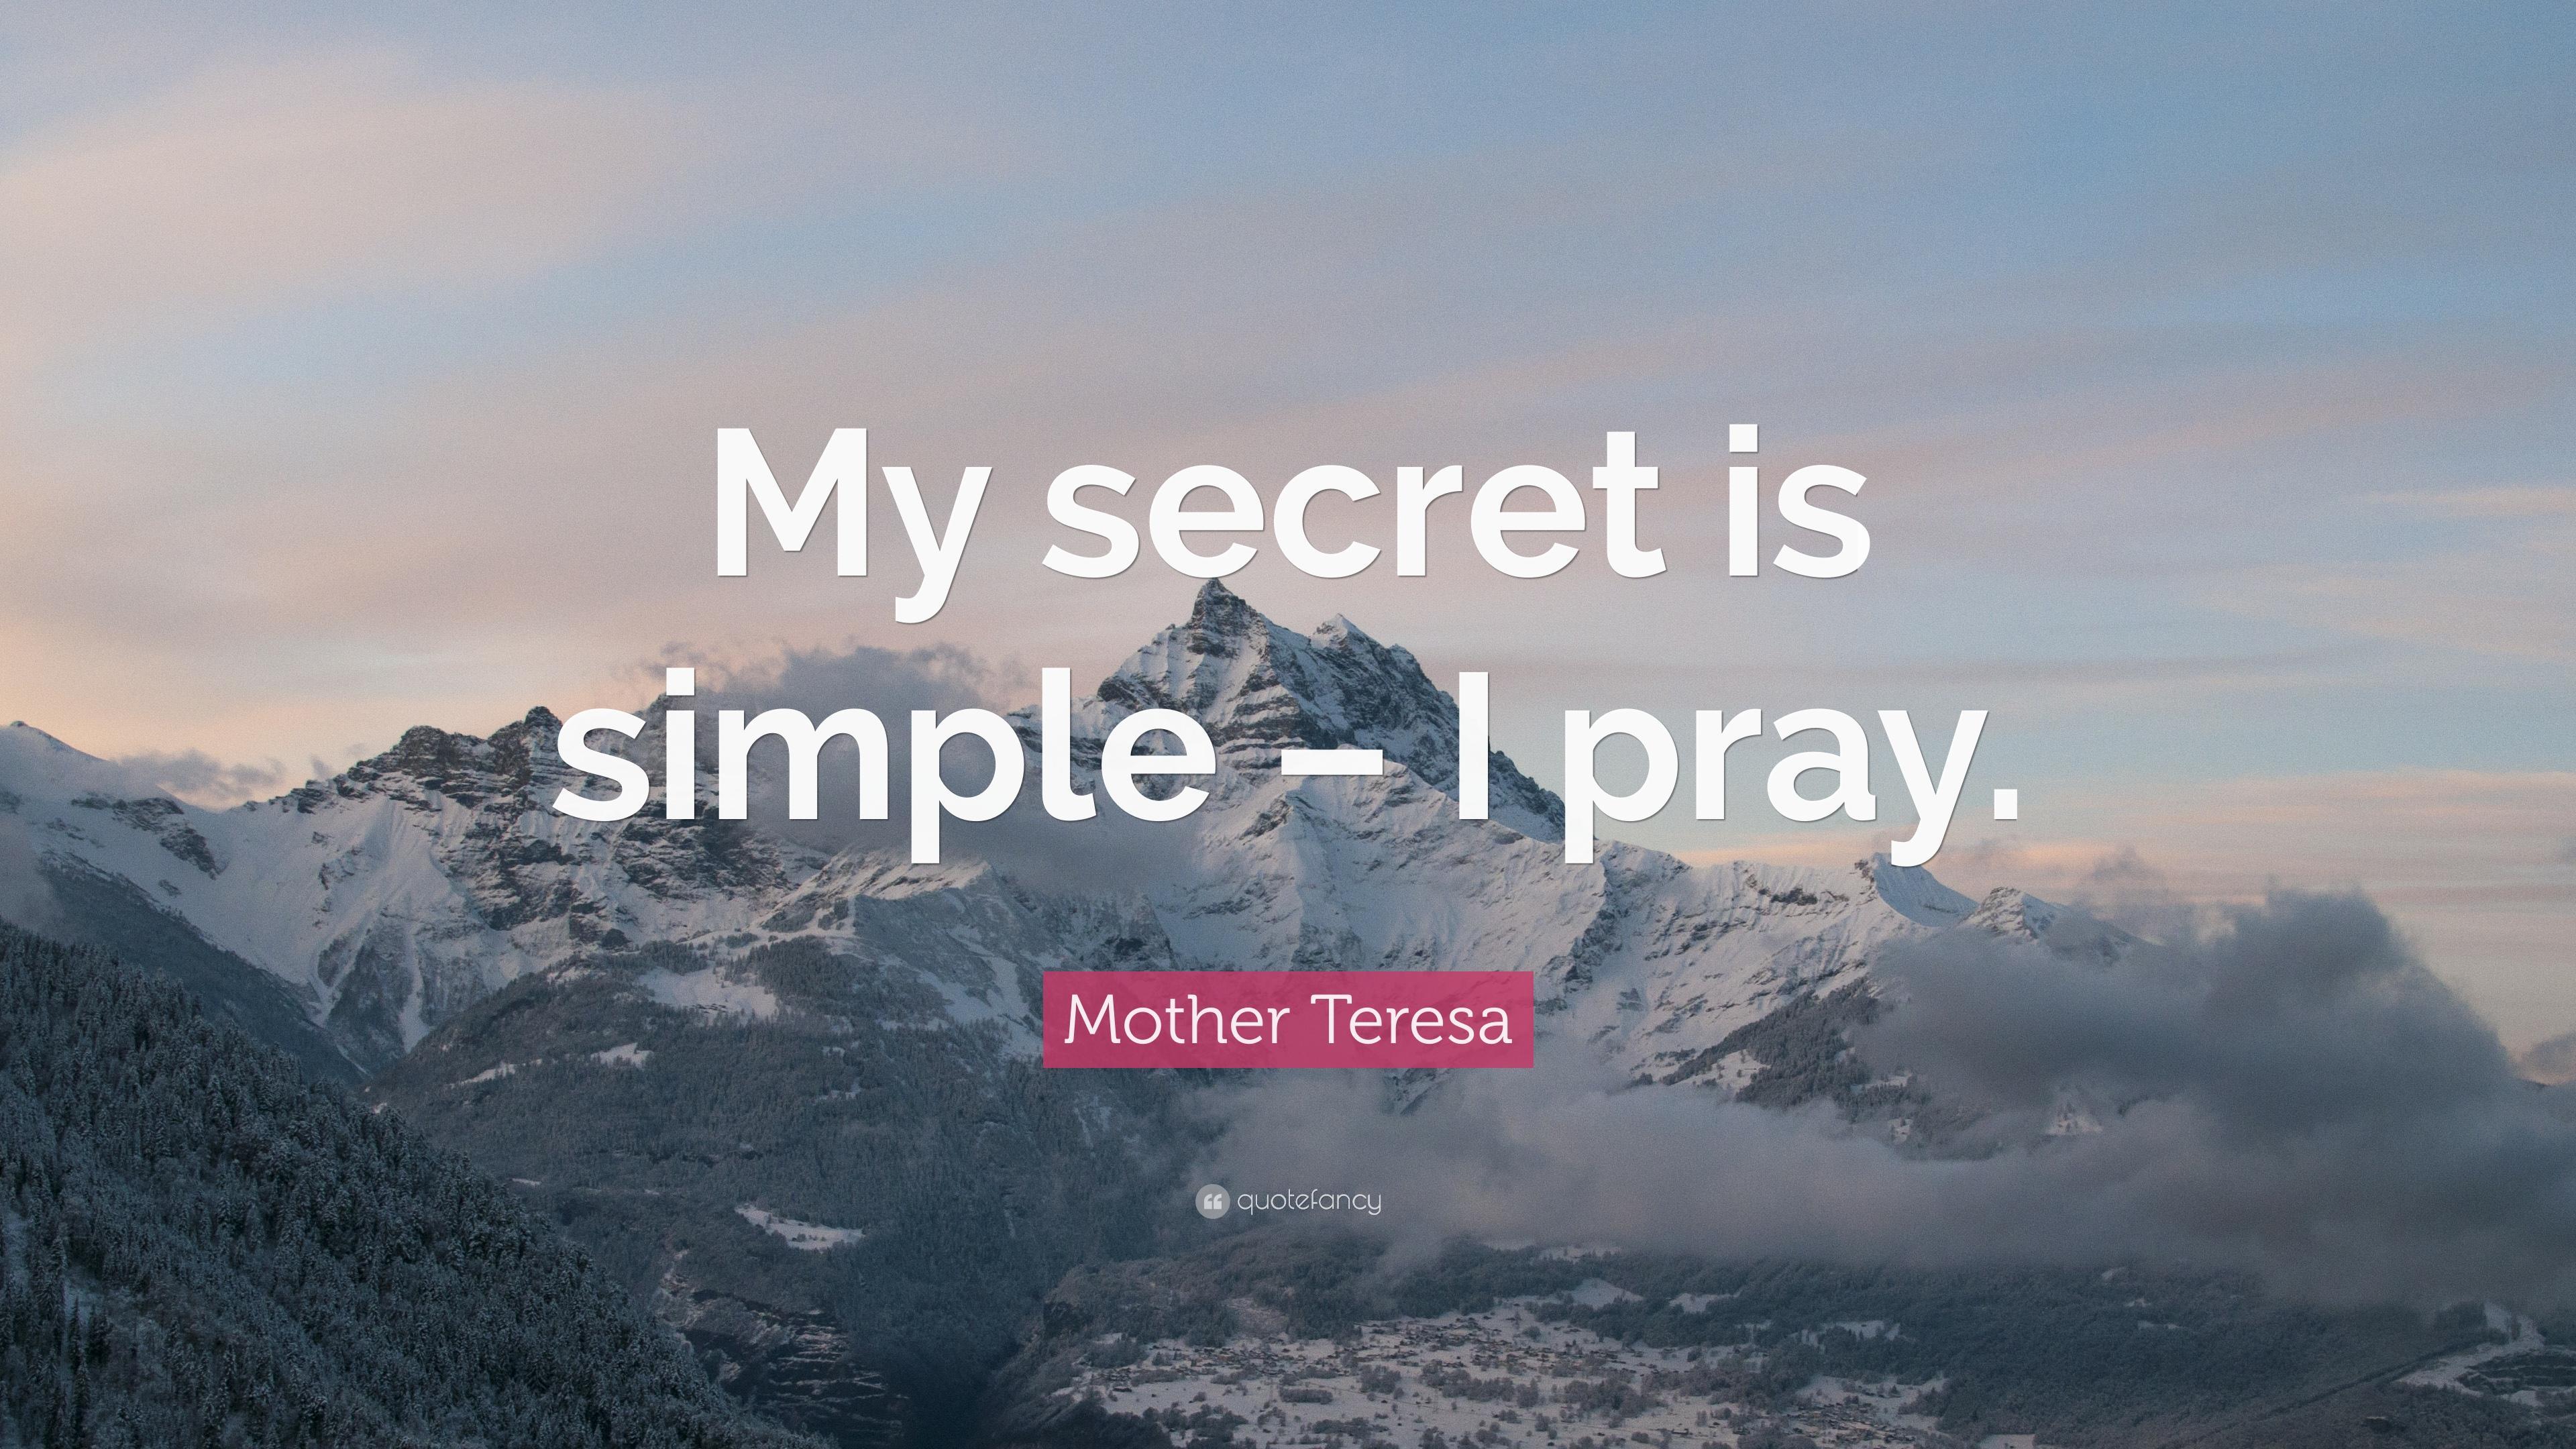 Mother Teresa Quote: “My secret is simple